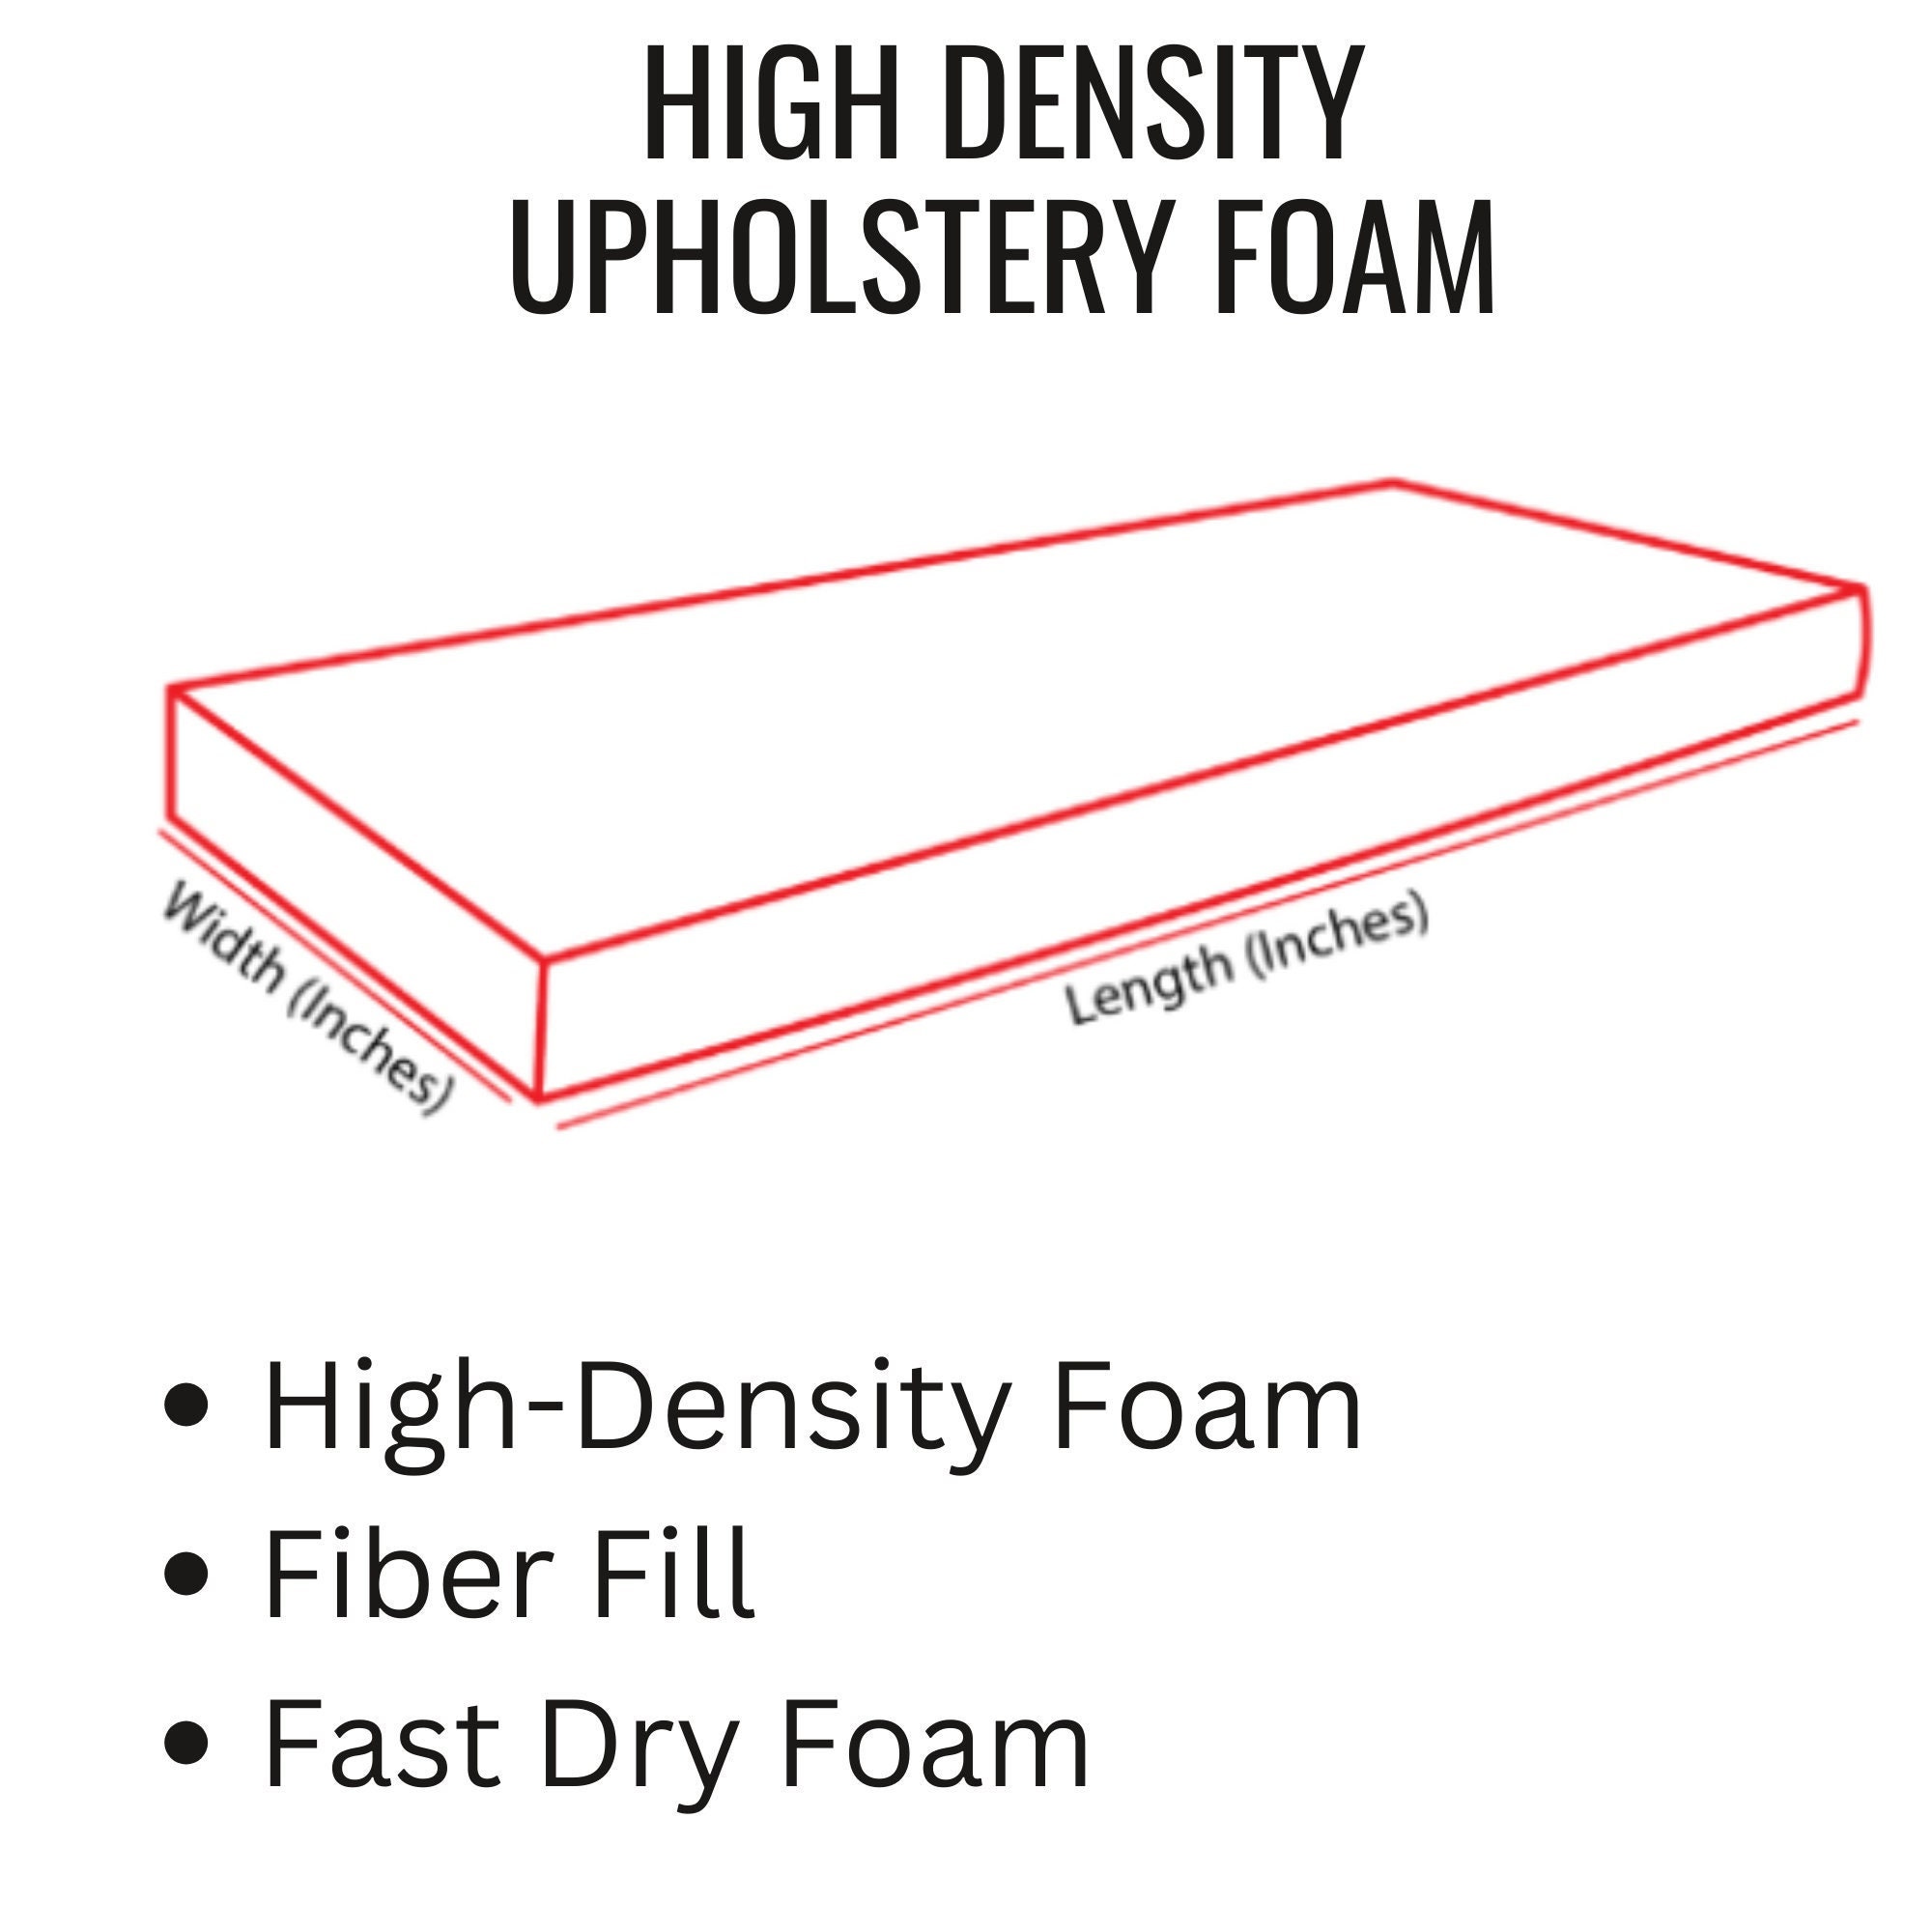 How to Apply Fiberfill to Foam